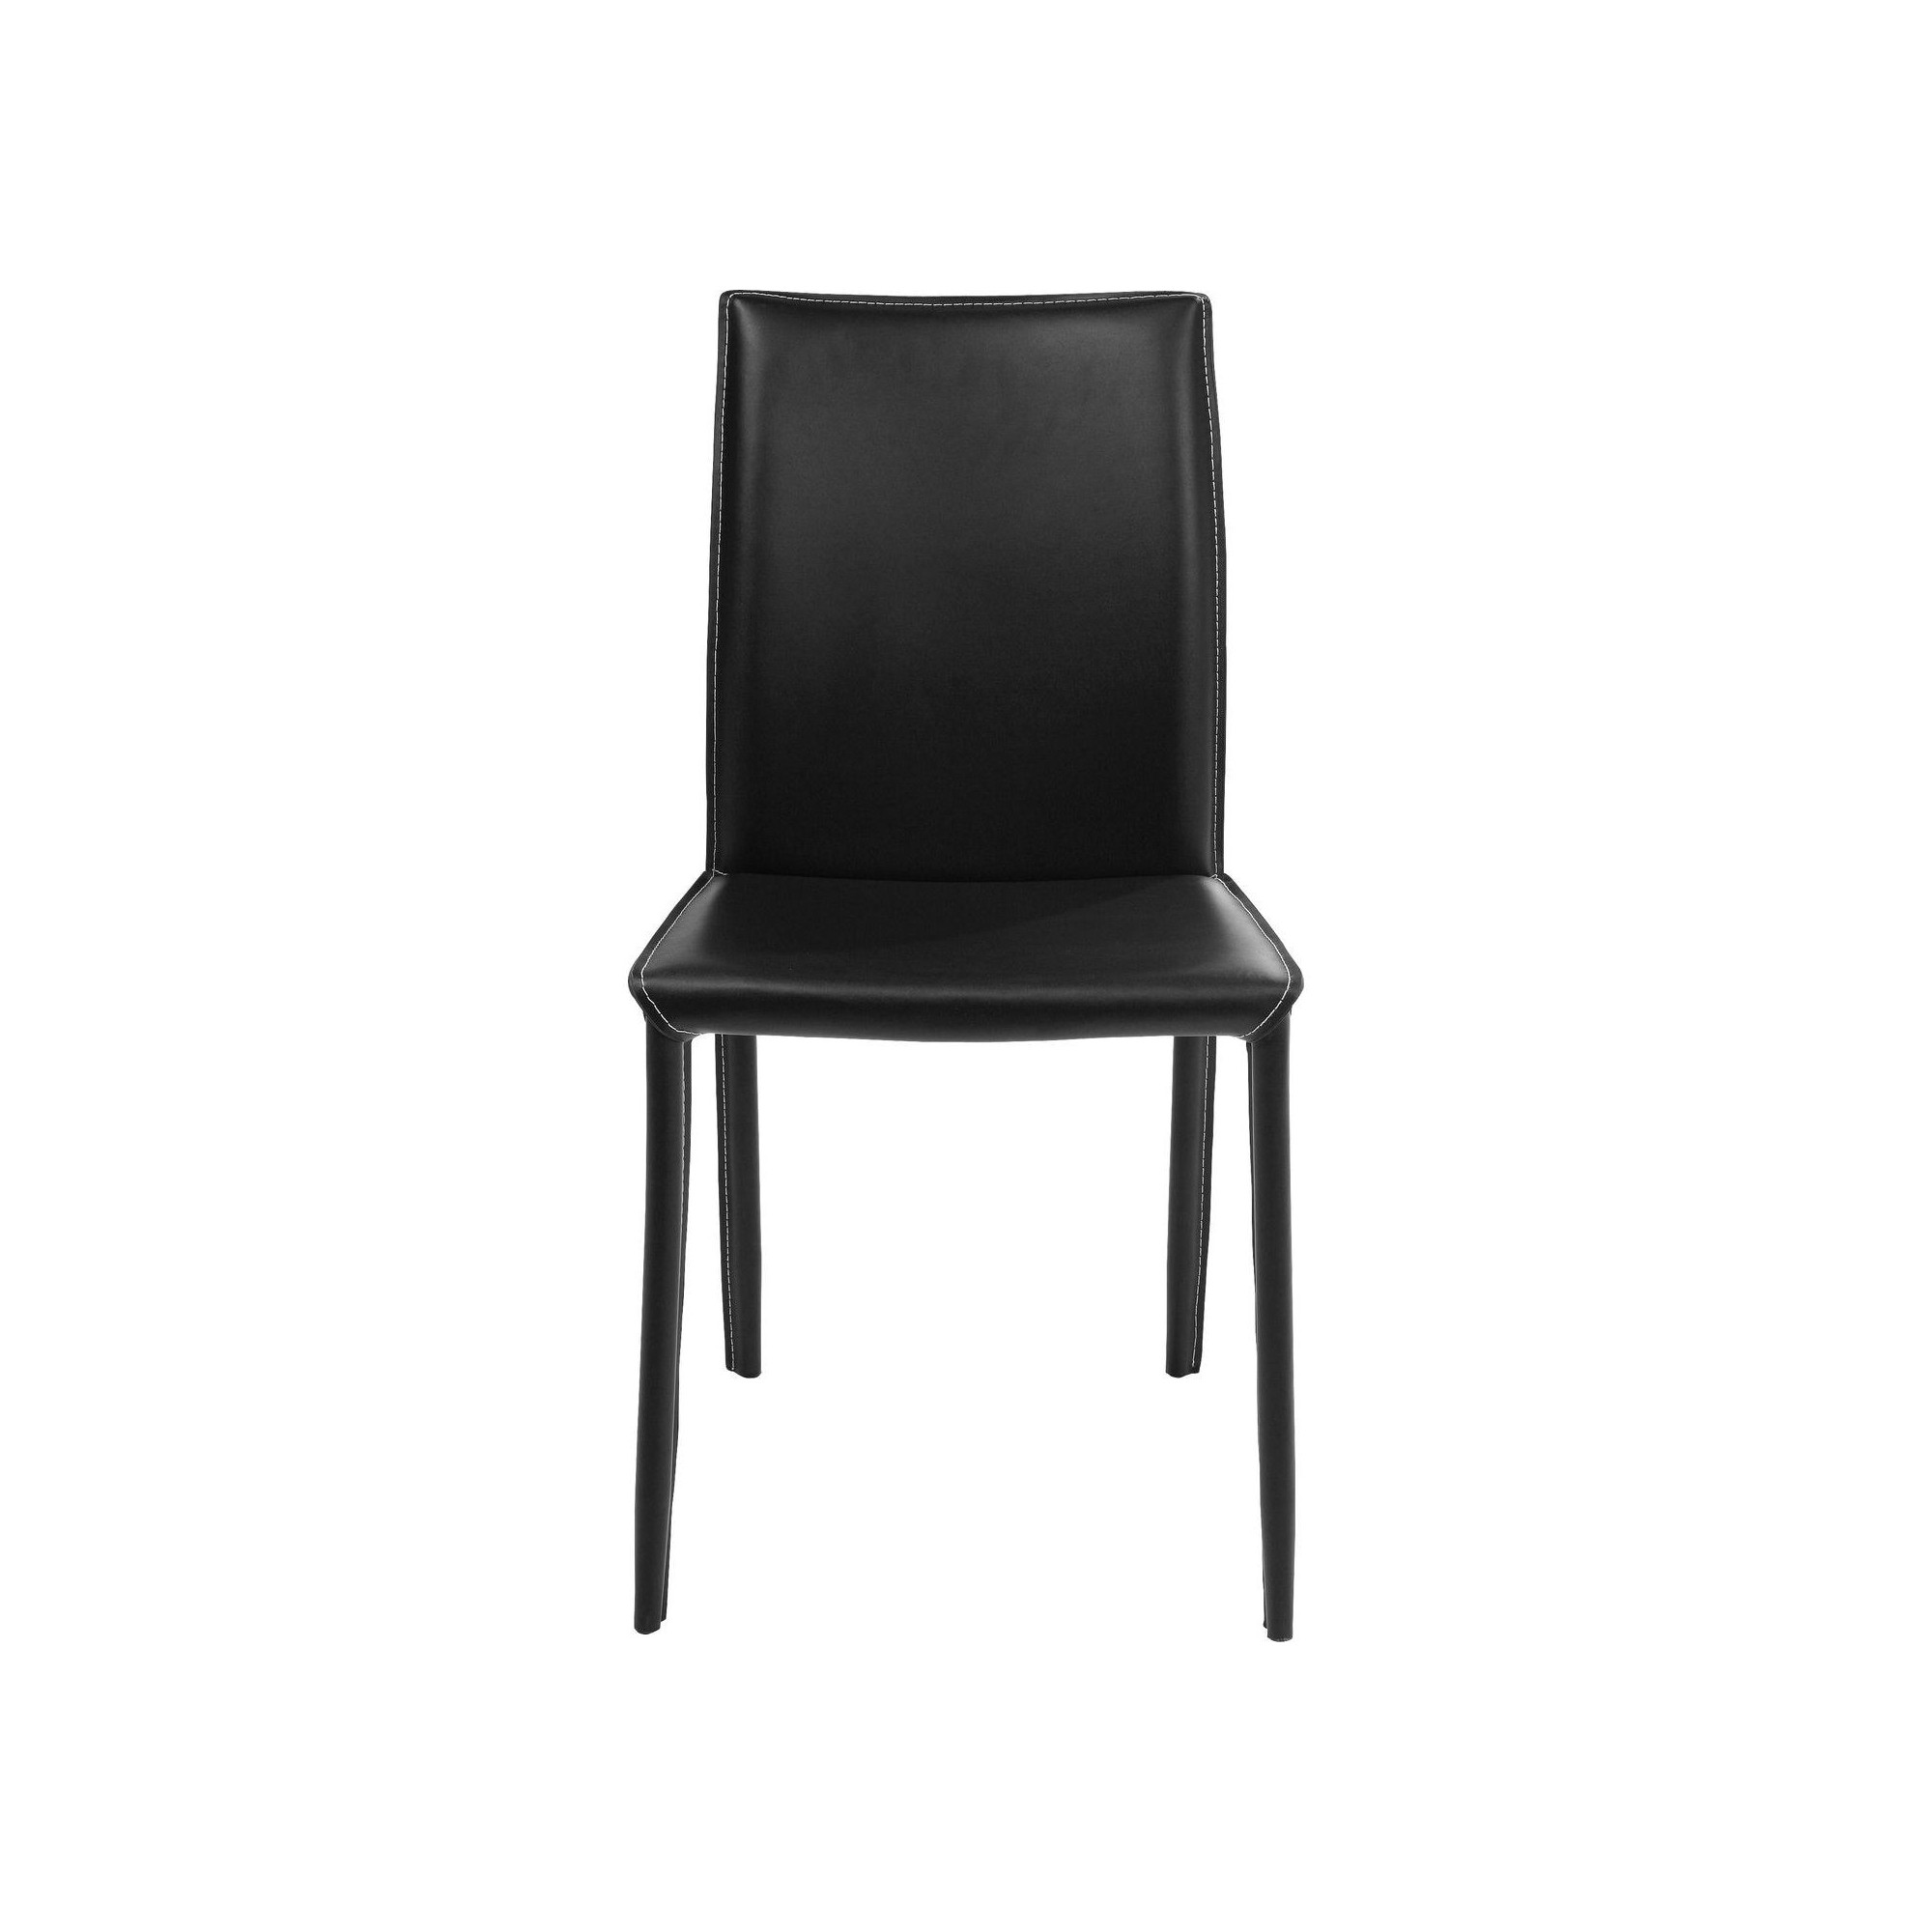 Chair Milano Black Kare Design